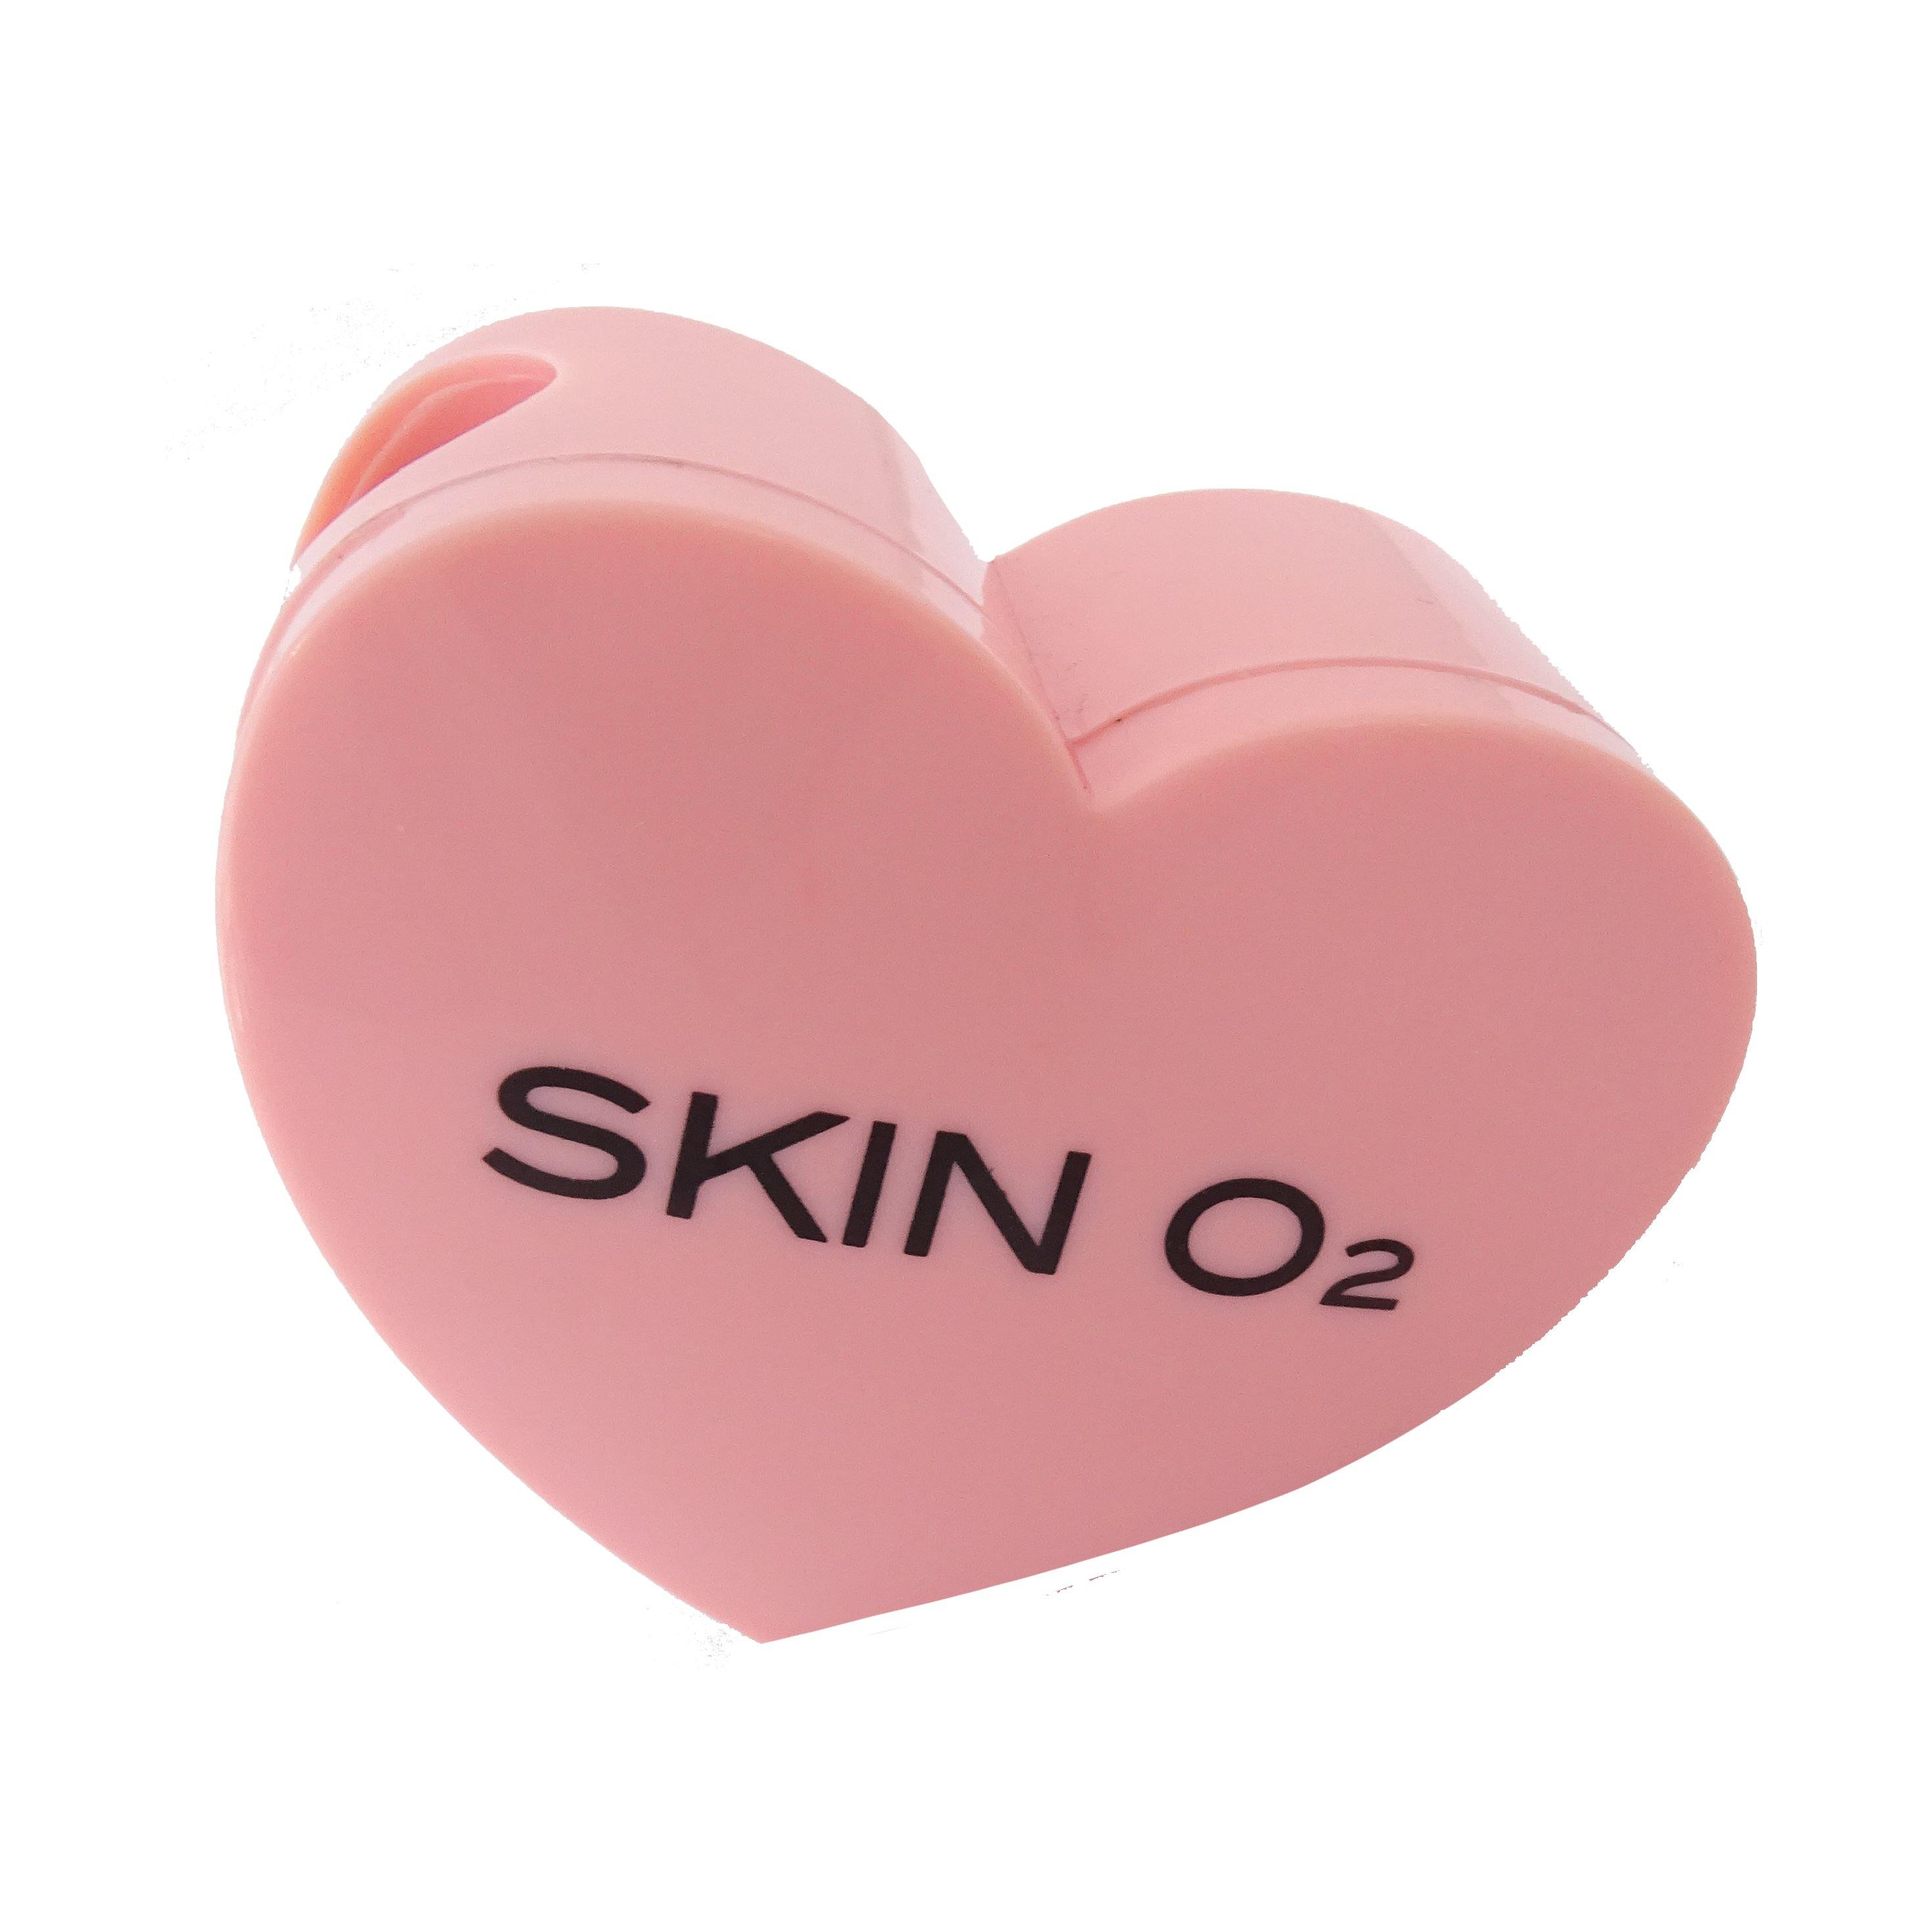 Pink Heart Pencil Sharpener - Skin O2